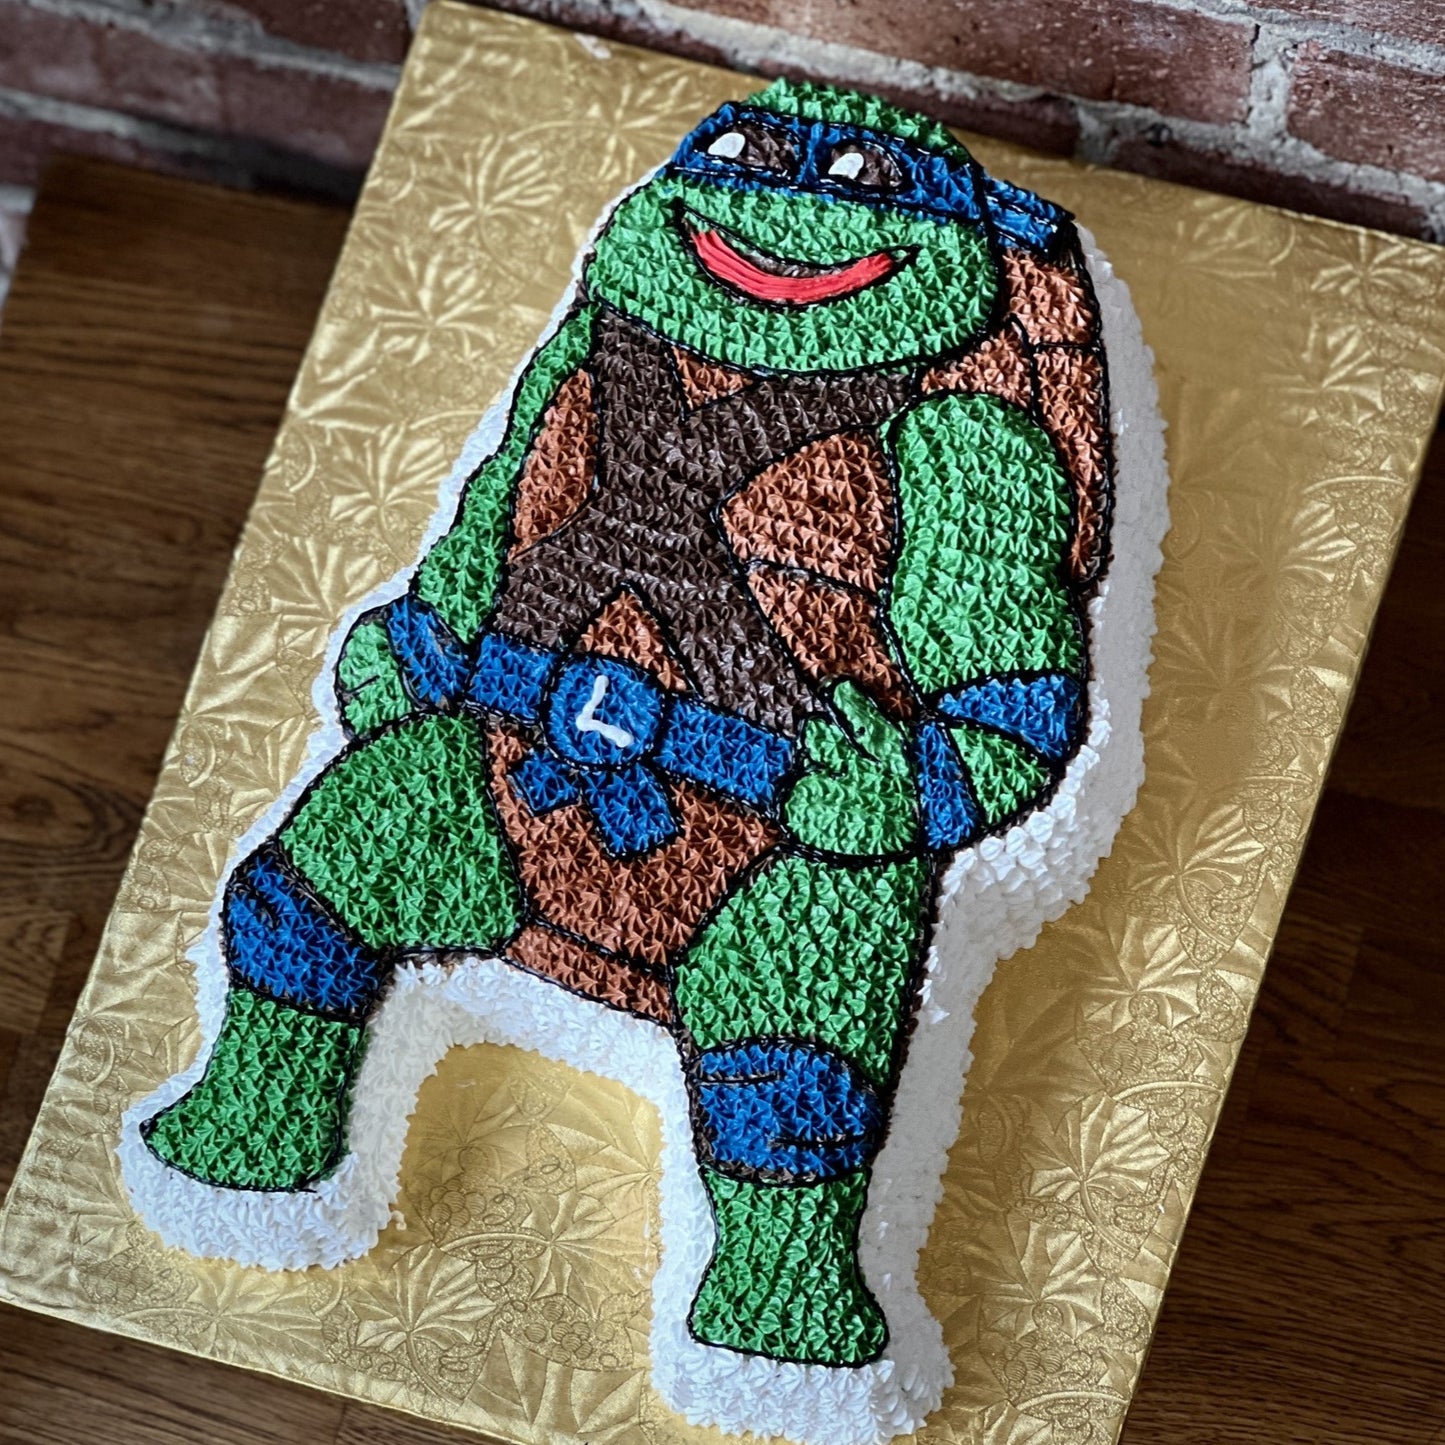 Retro style ninja turtles cake of Leonardo